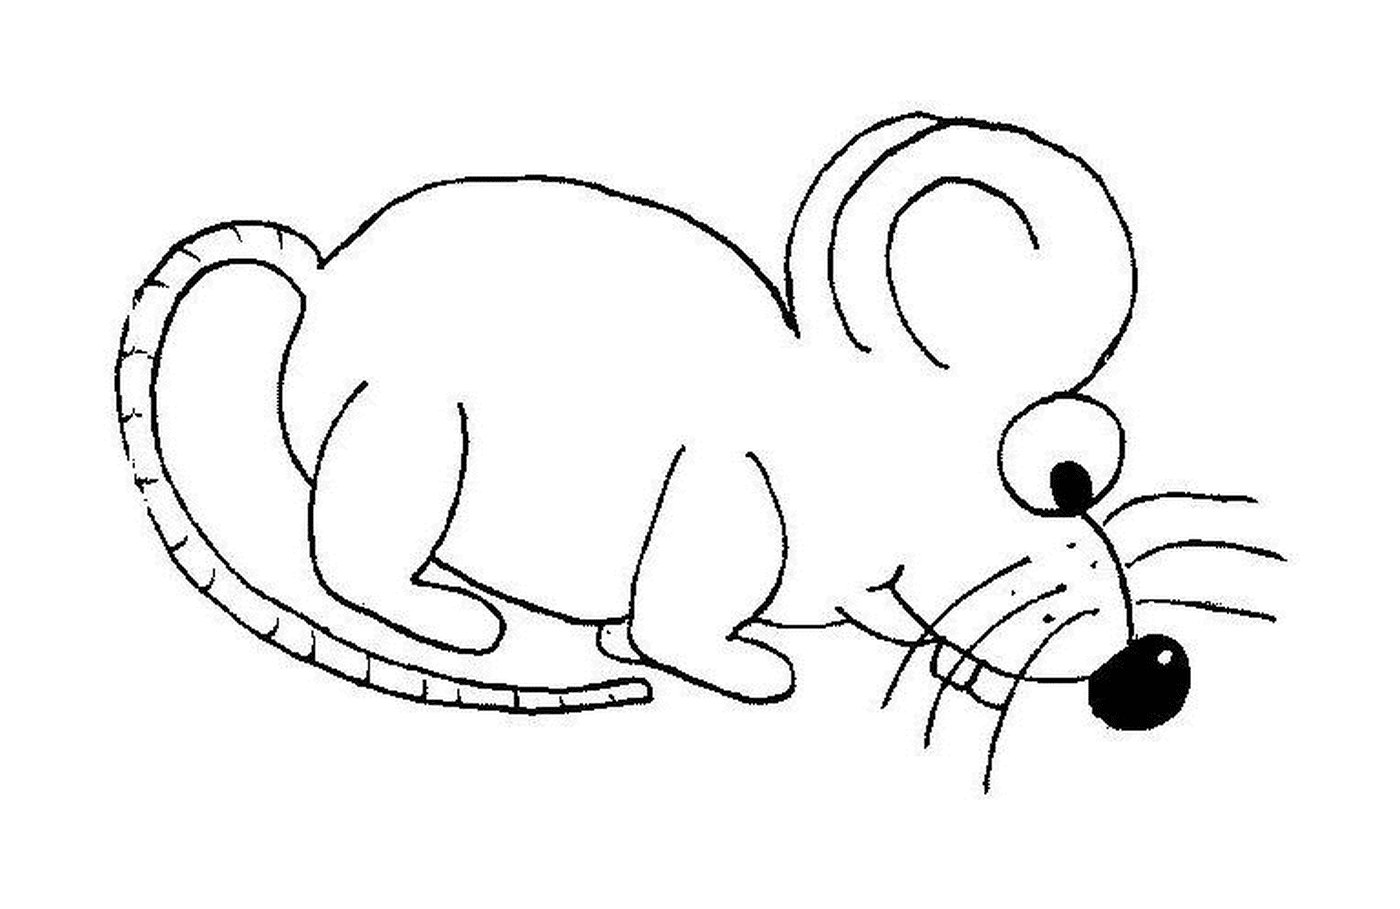  Мышь ест 